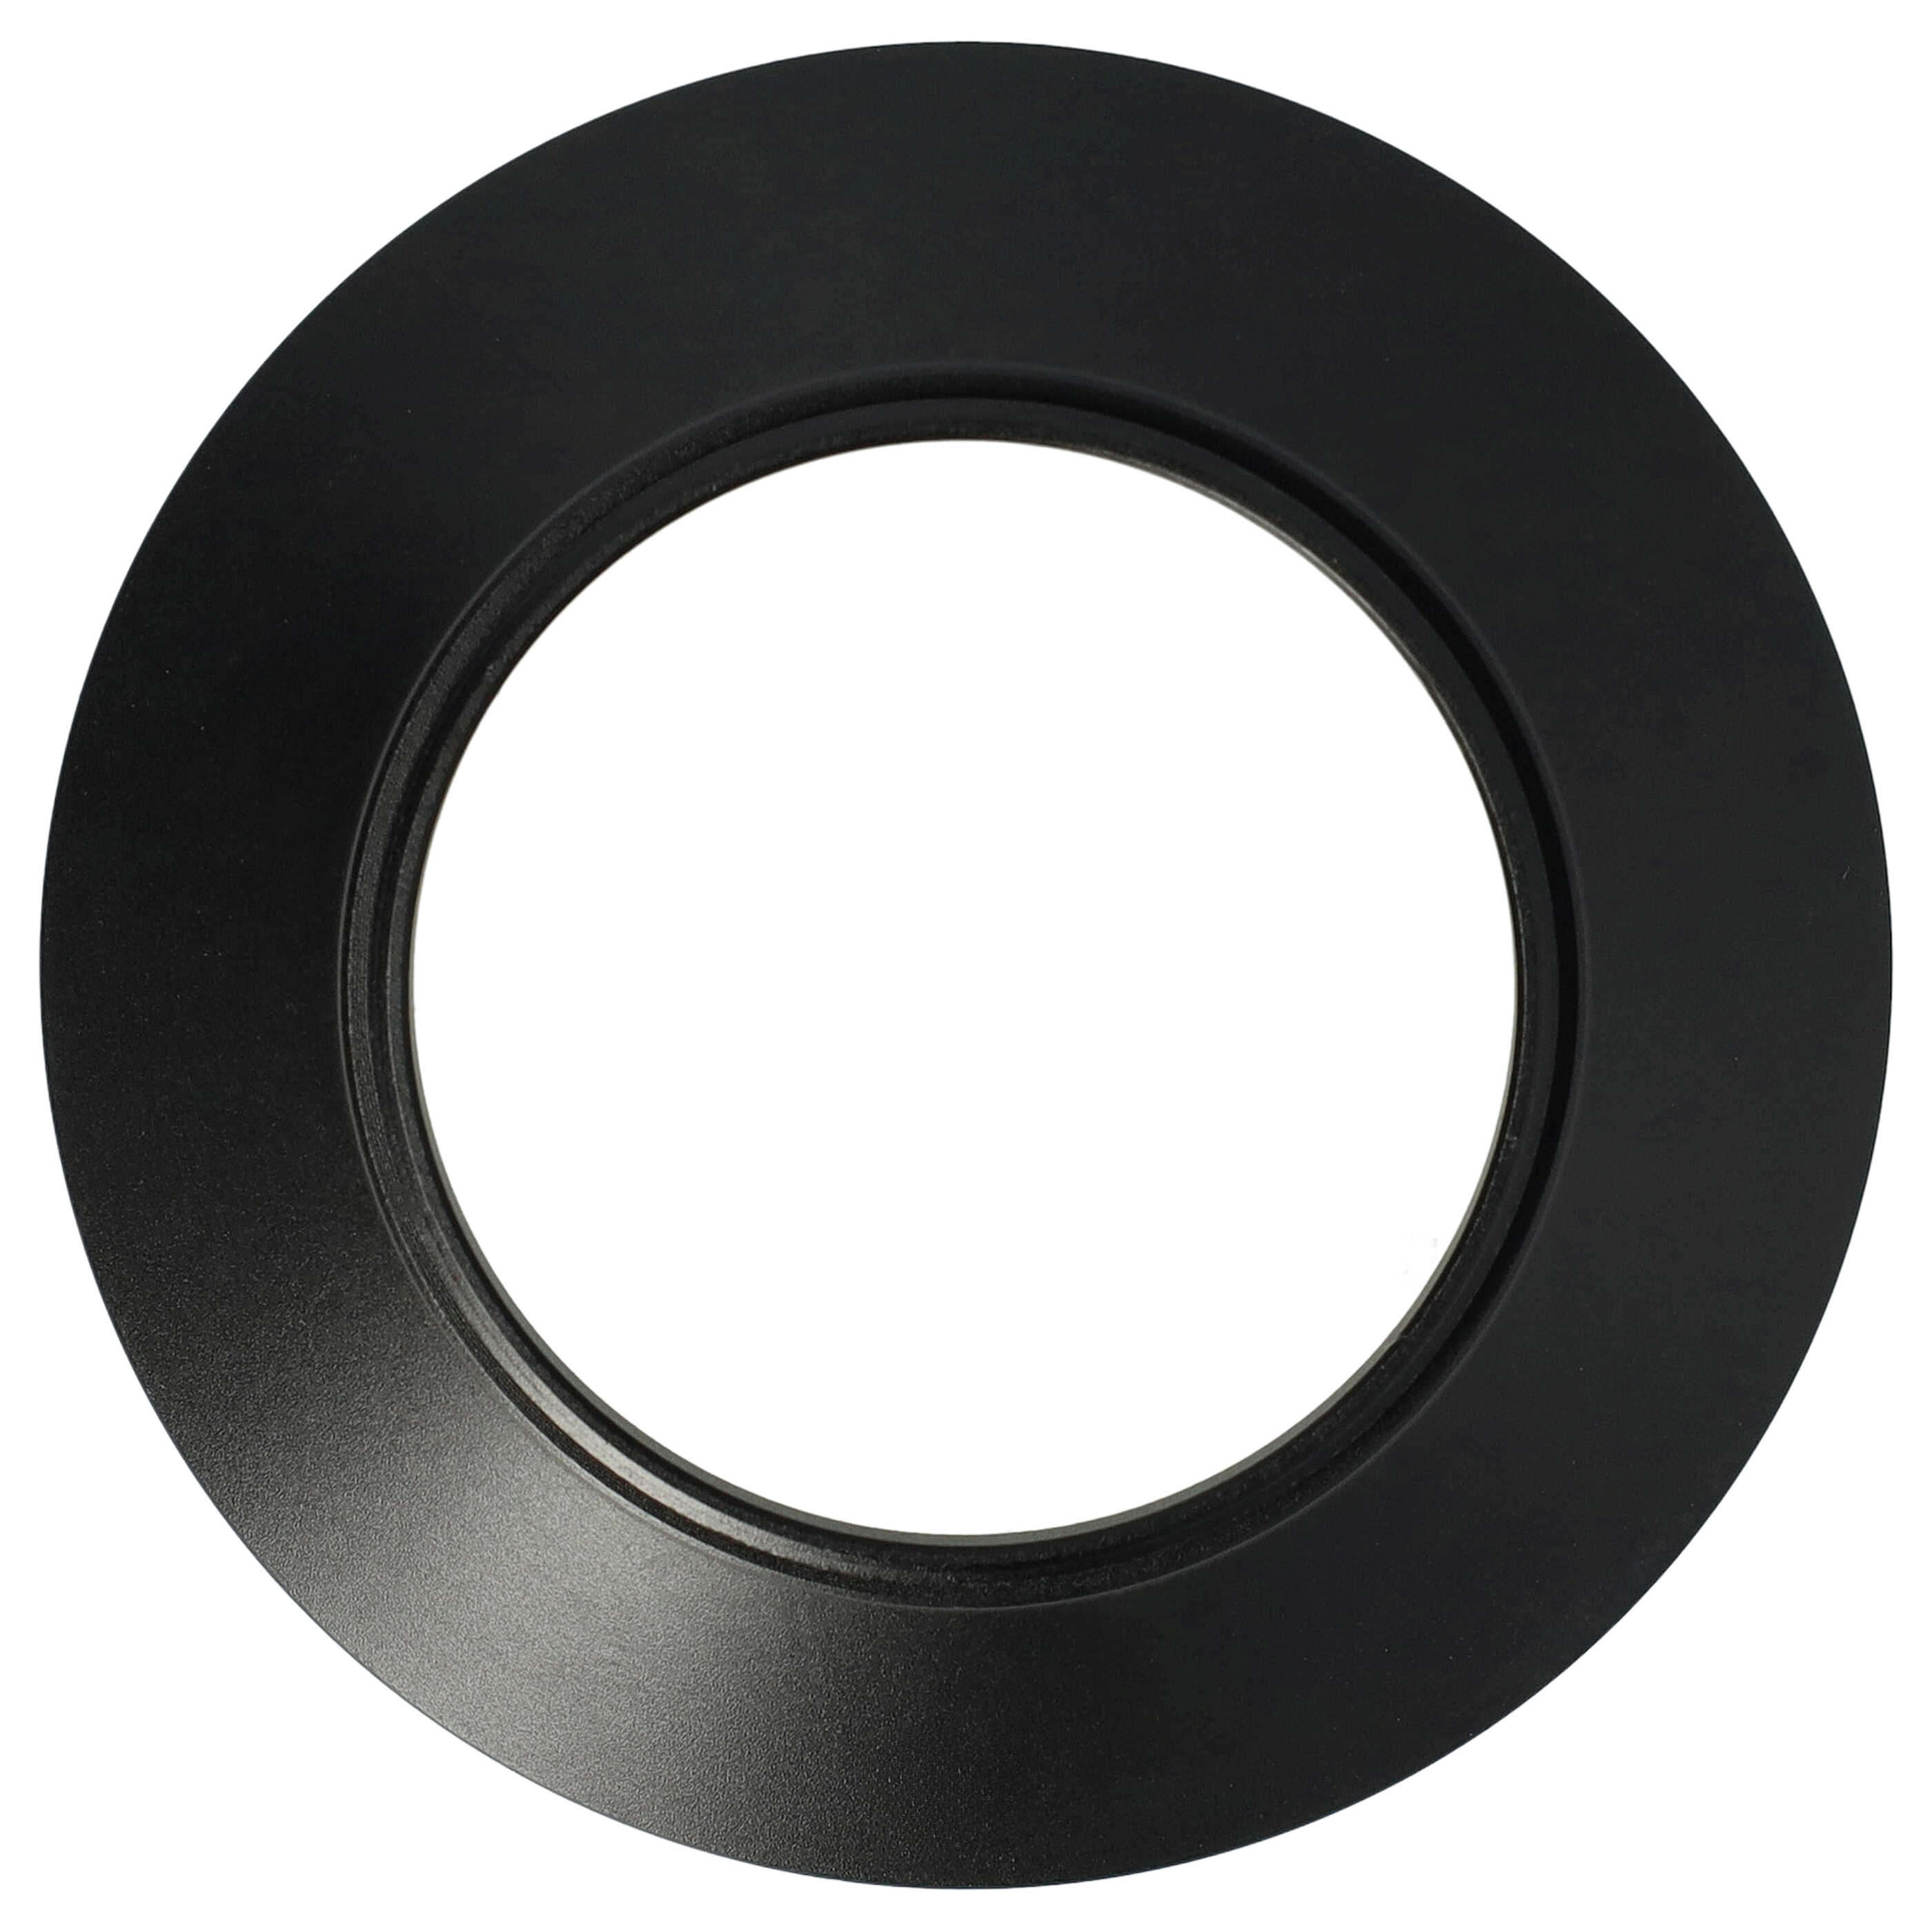 Lens Hood suitable for 40.5mm Lens - Lens Shade Black, Round